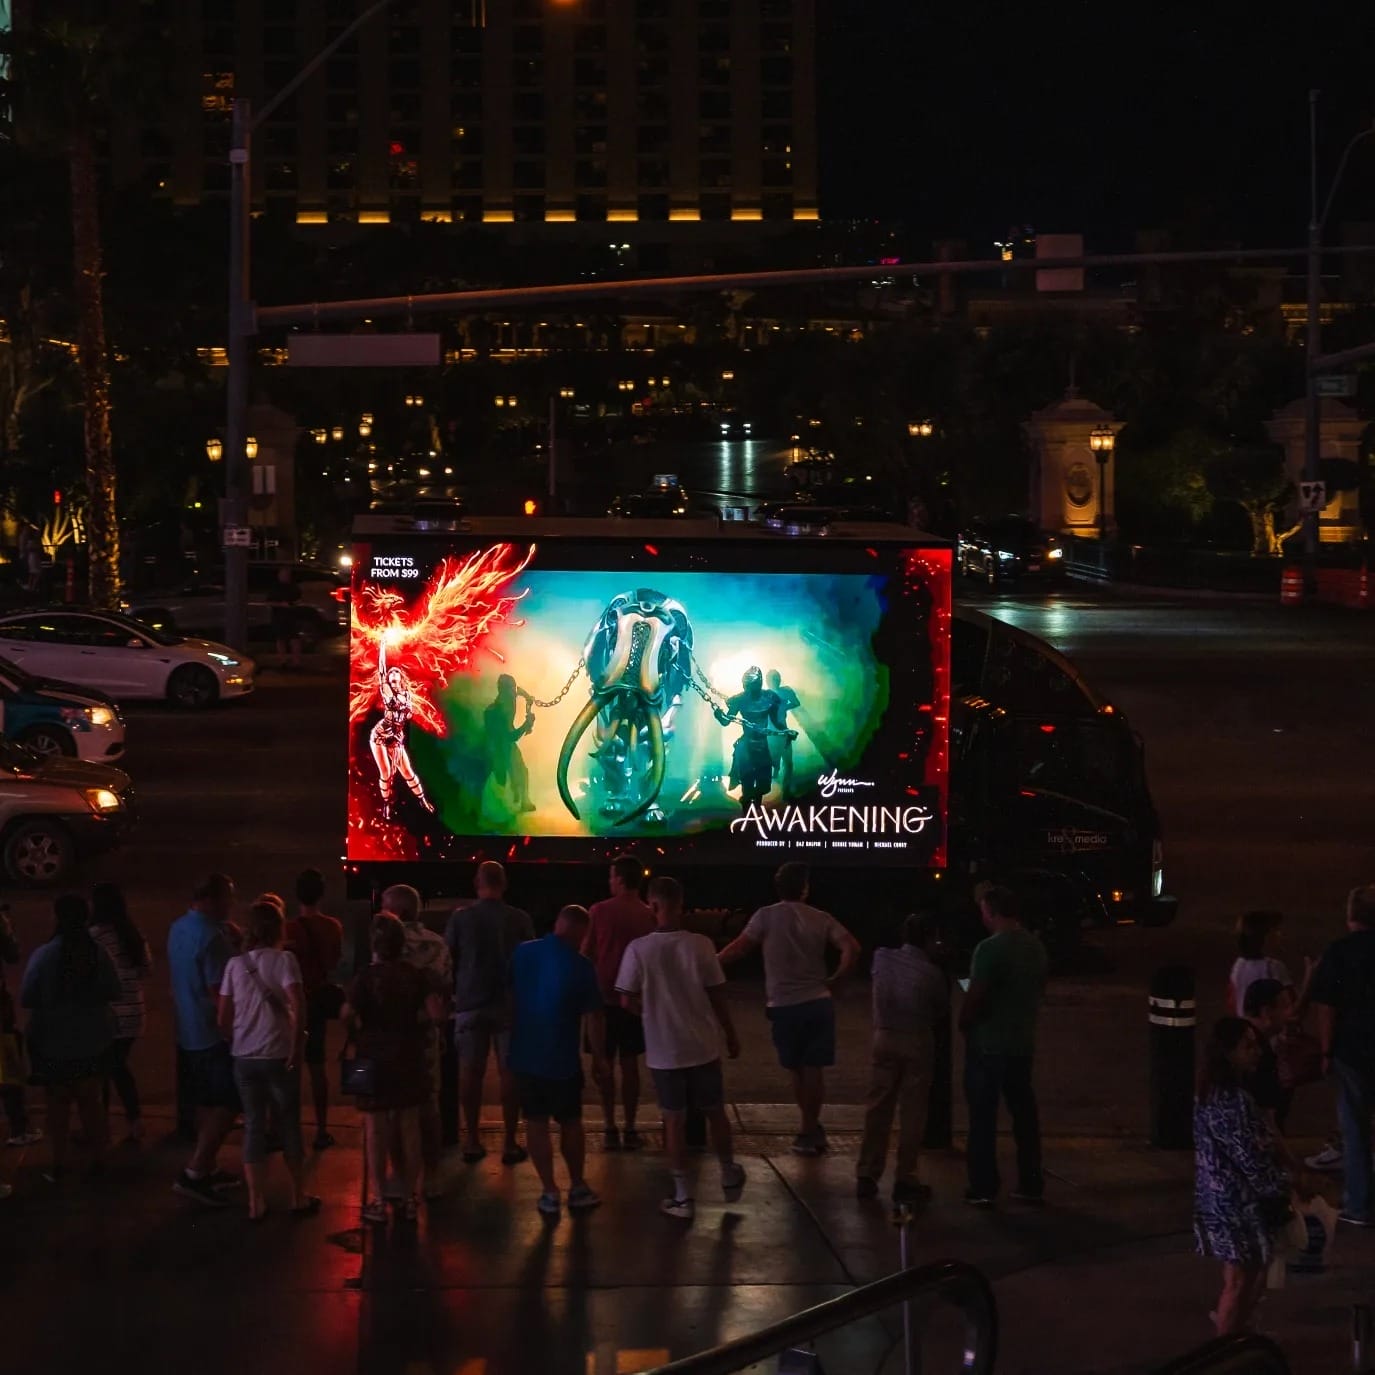 People viewing outdoor "Awakening" show advertisement at night.